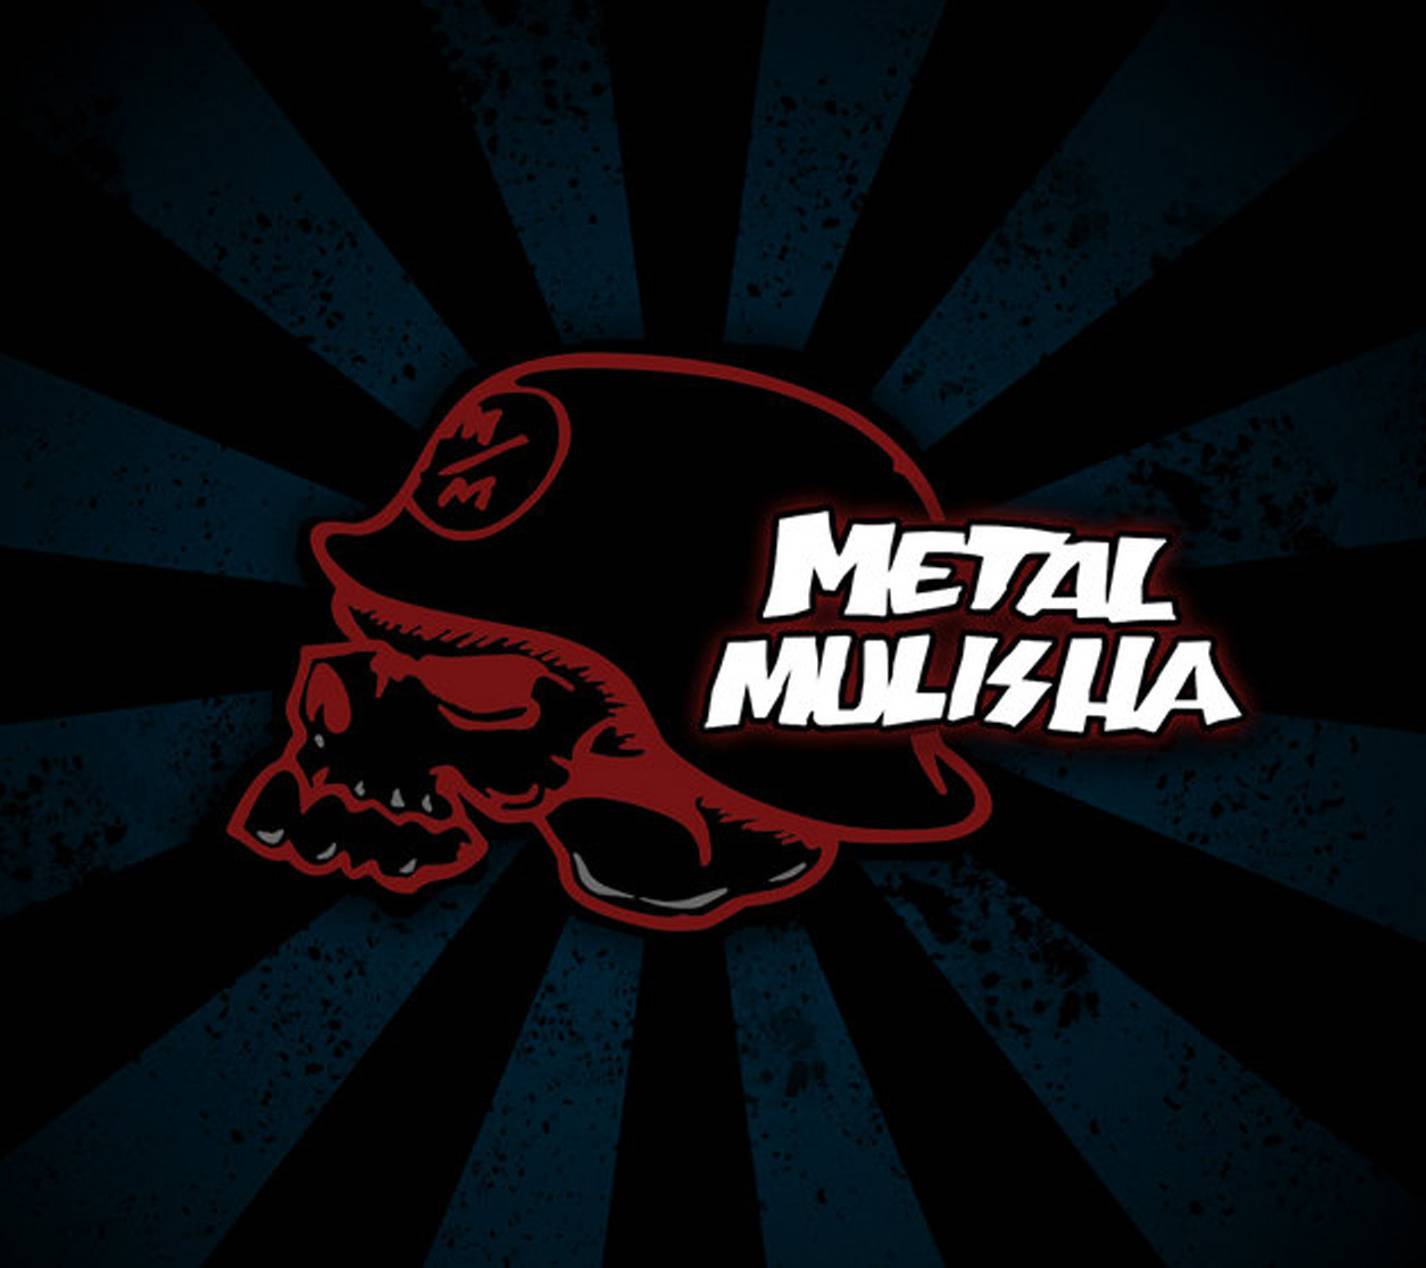 Download free metal mulisha wallpaper for your mobile phone